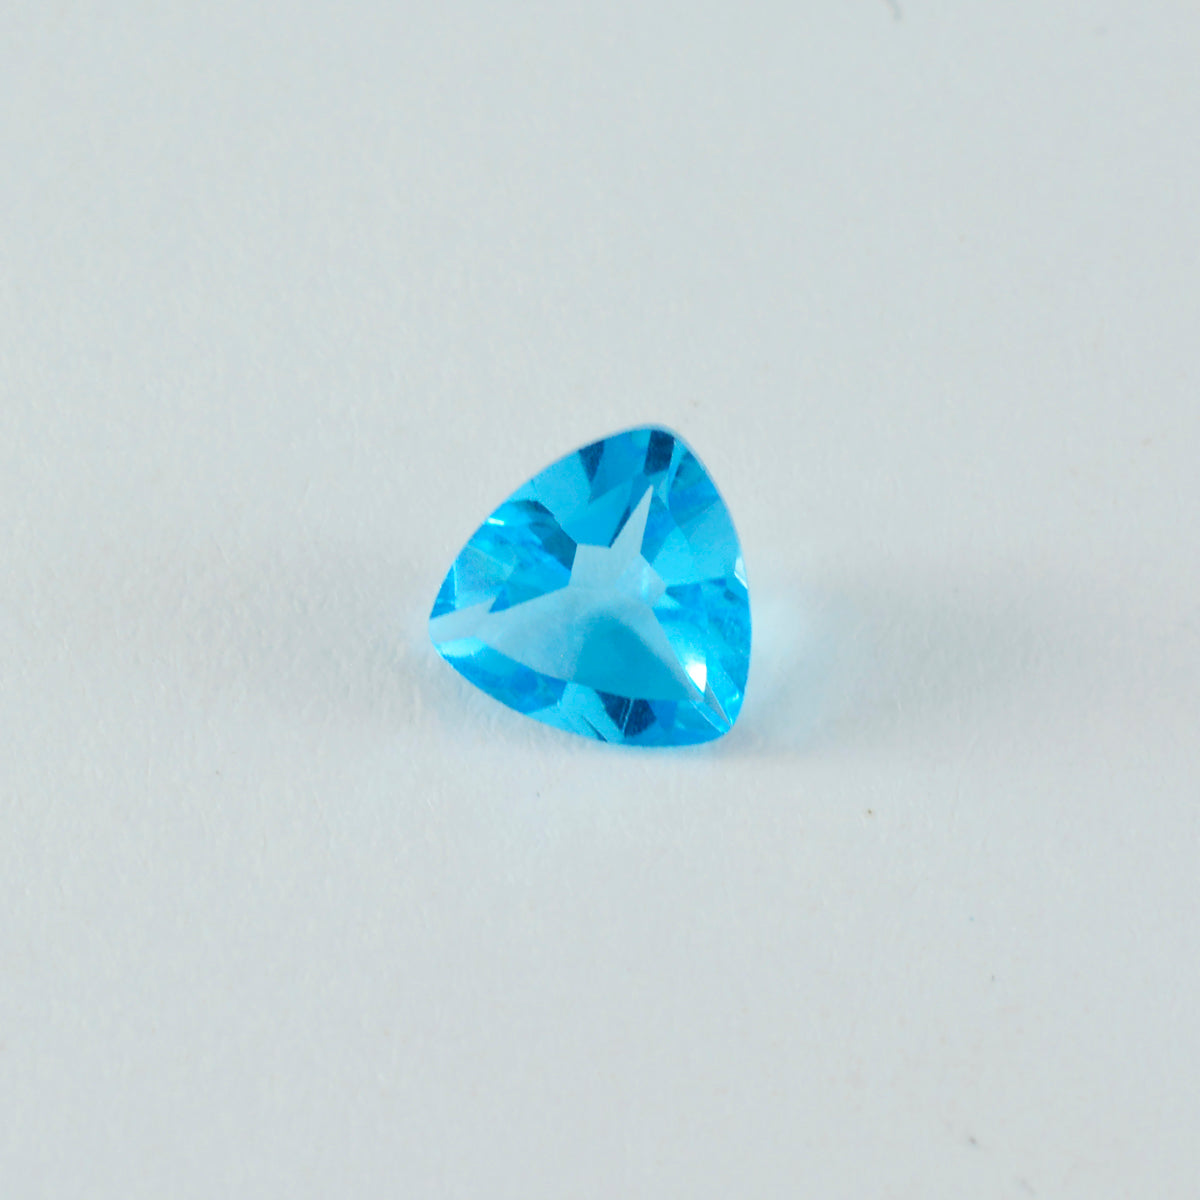 Riyogems 1PC Blue Topaz CZ Faceted 12x12 mm Trillion Shape amazing Quality Gemstone